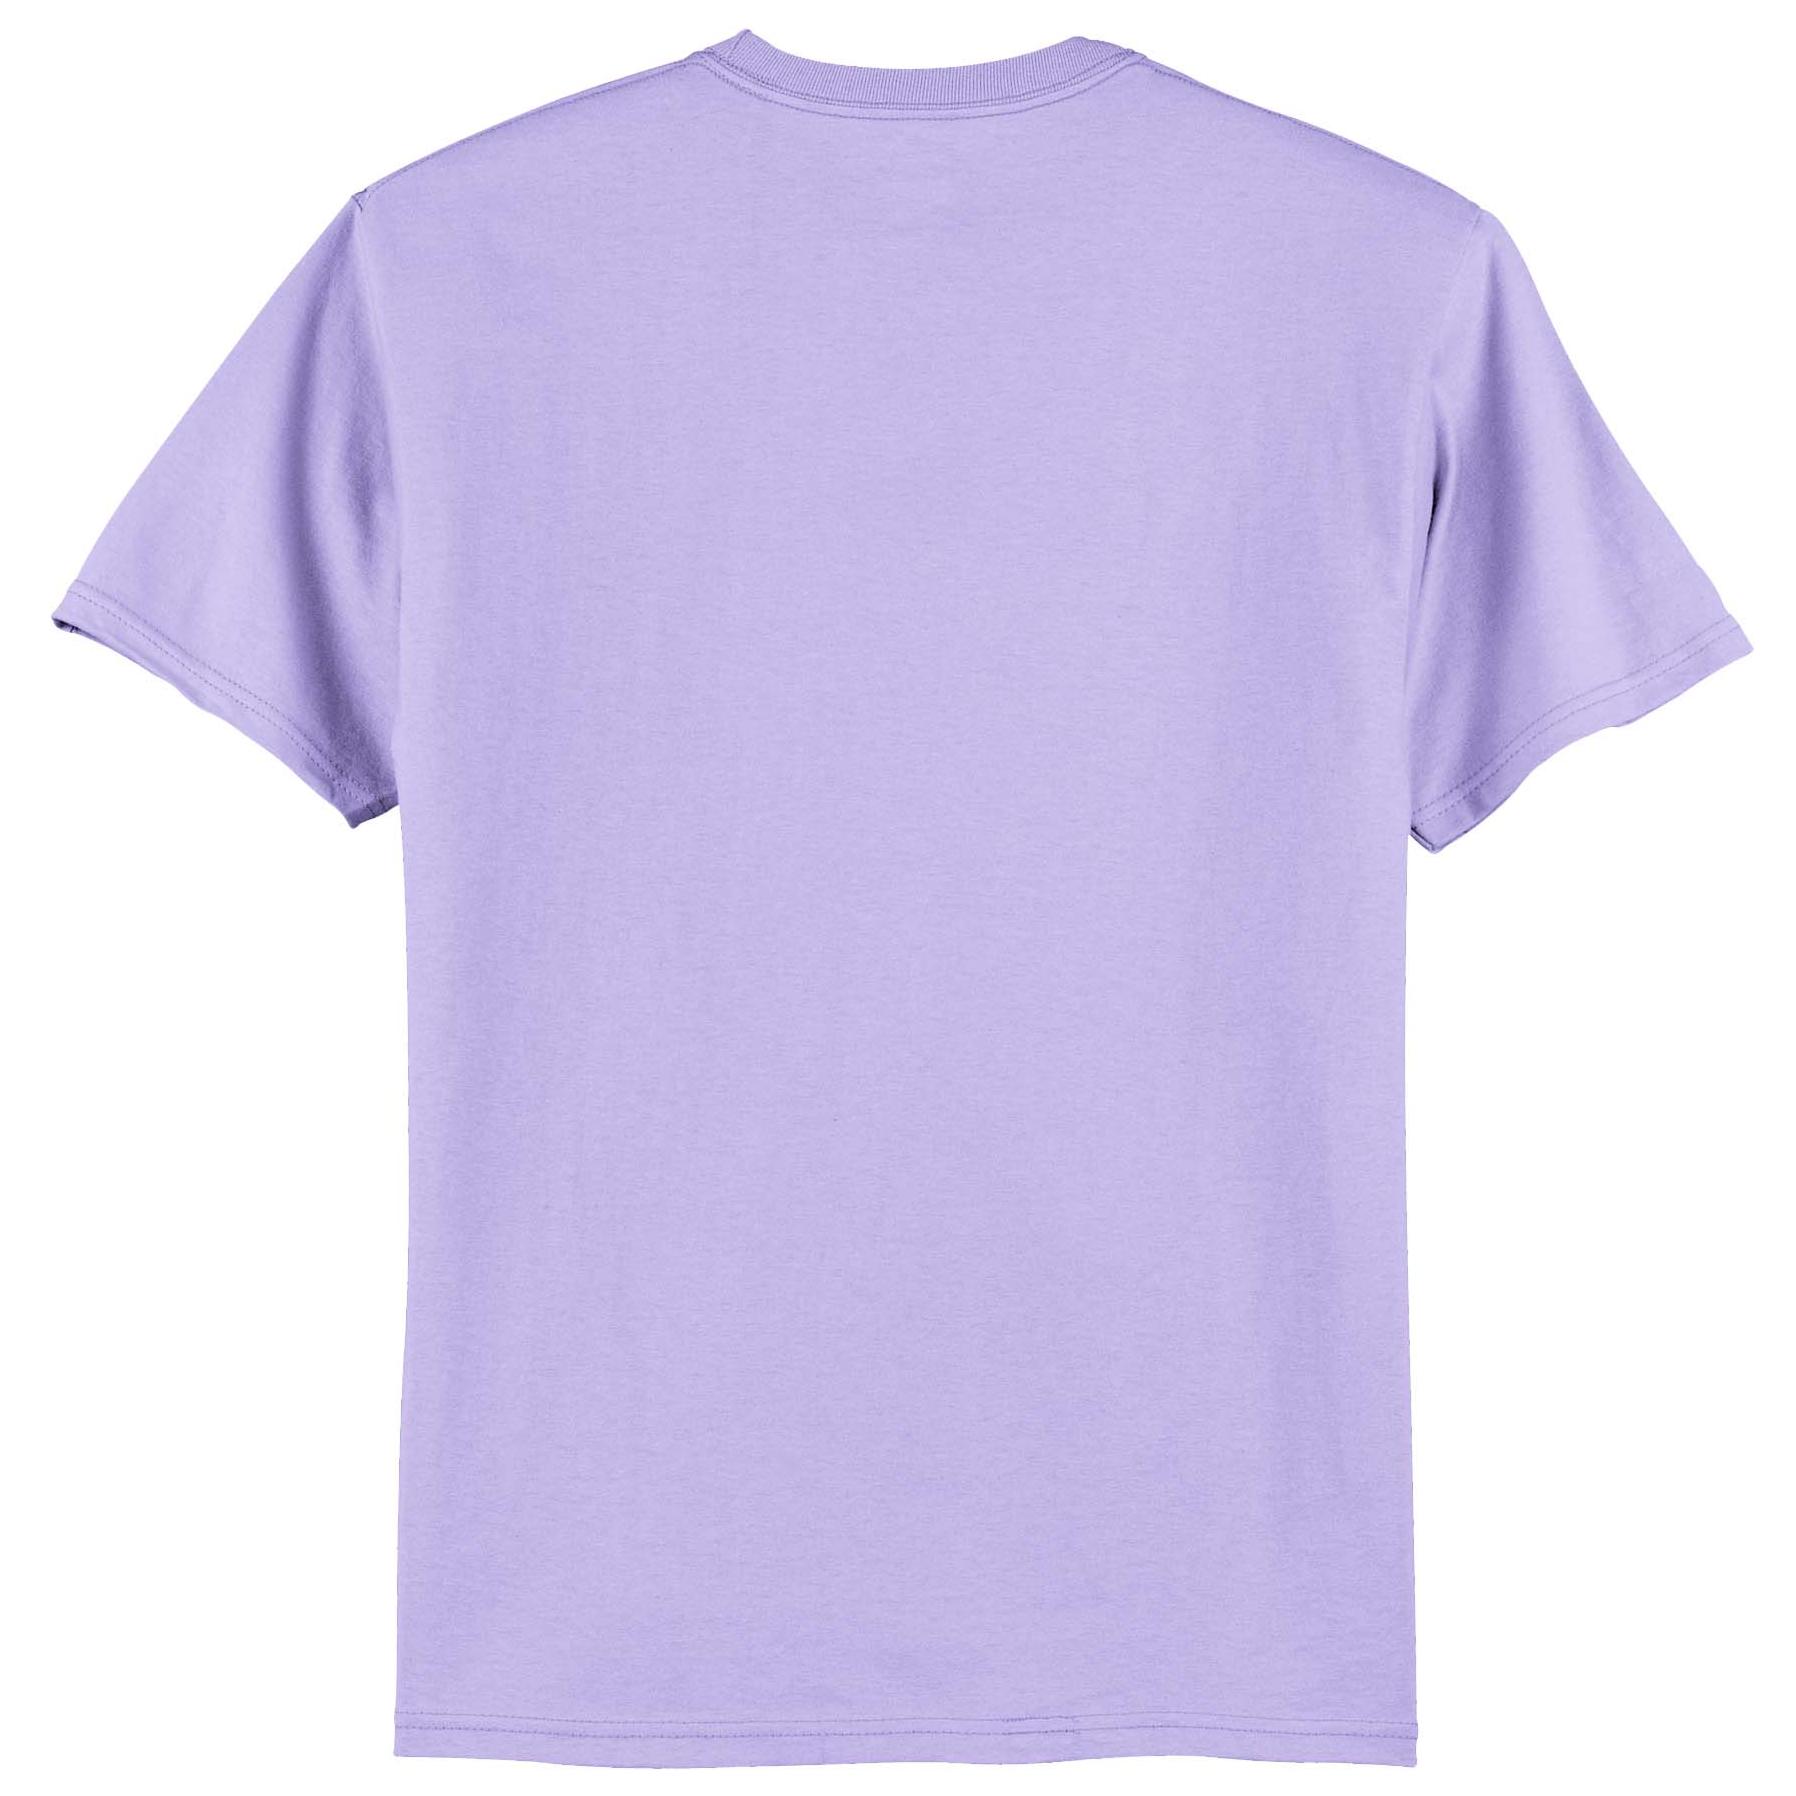 Hanes 5250T Men's 6.1 oz. Tagless T-Shirt - Lavender - L